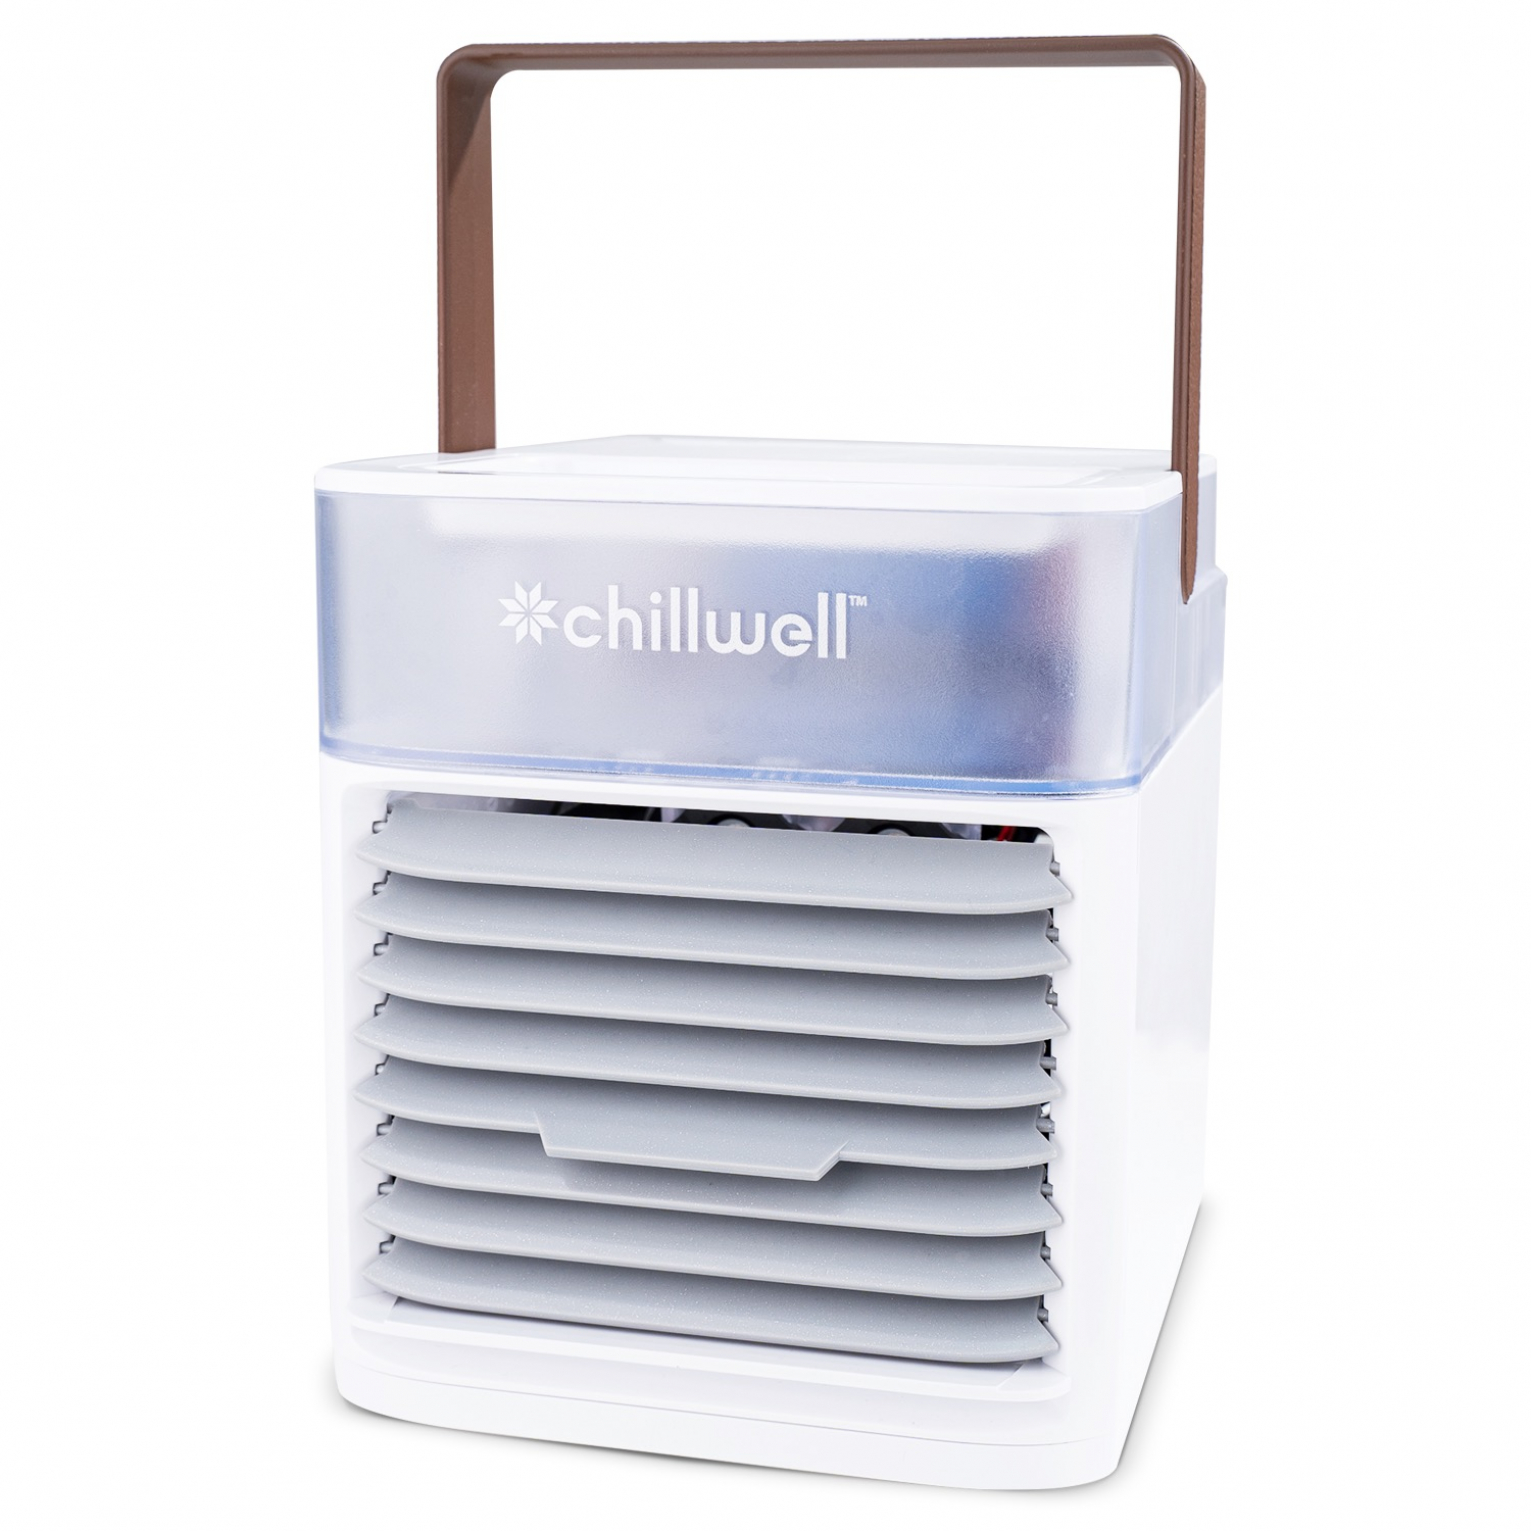 Chillwell AC Portable Ac Units